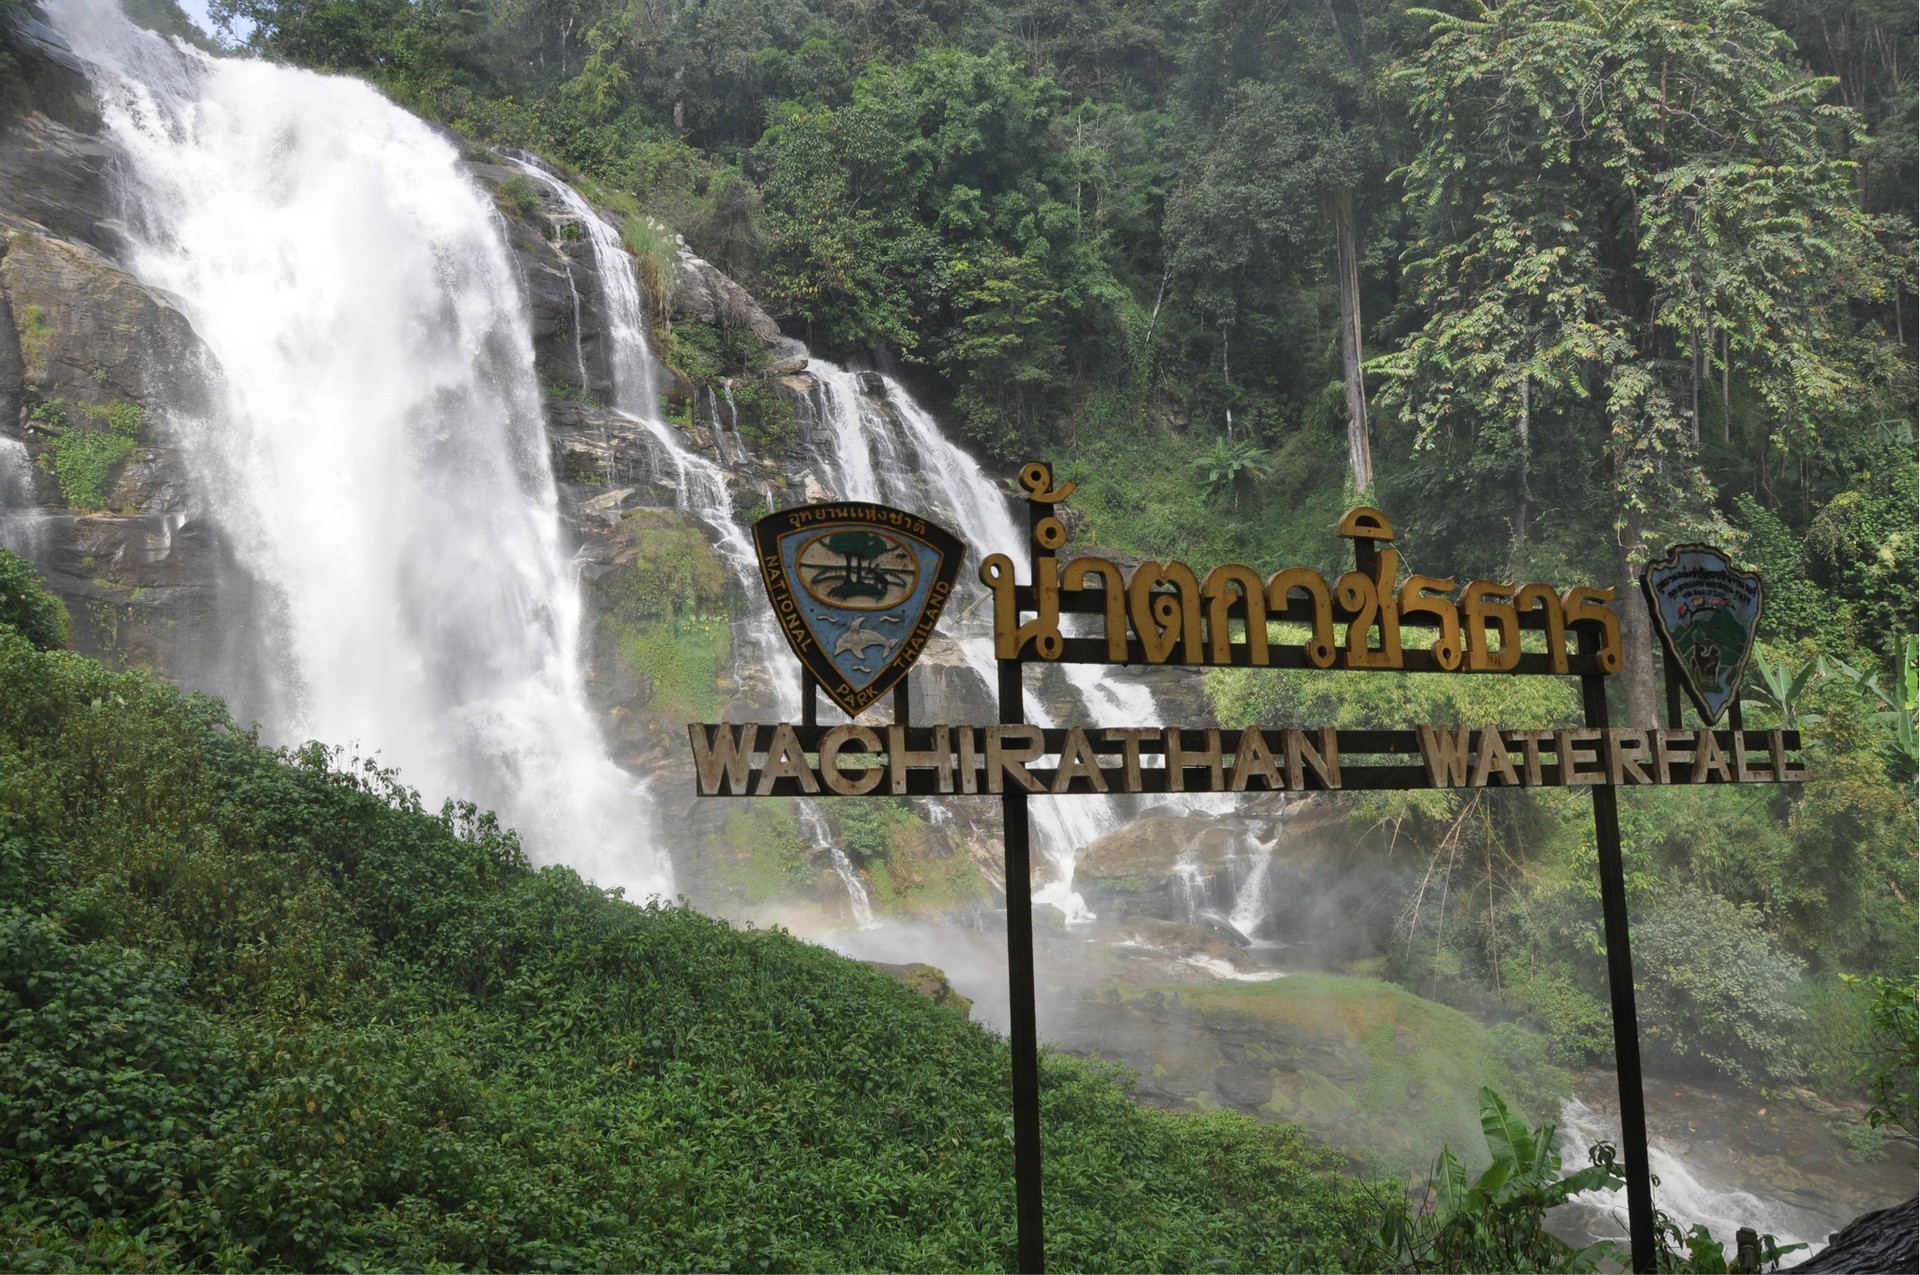 瓦吉拉坦瀑布(The Wachirathan Waterfall)